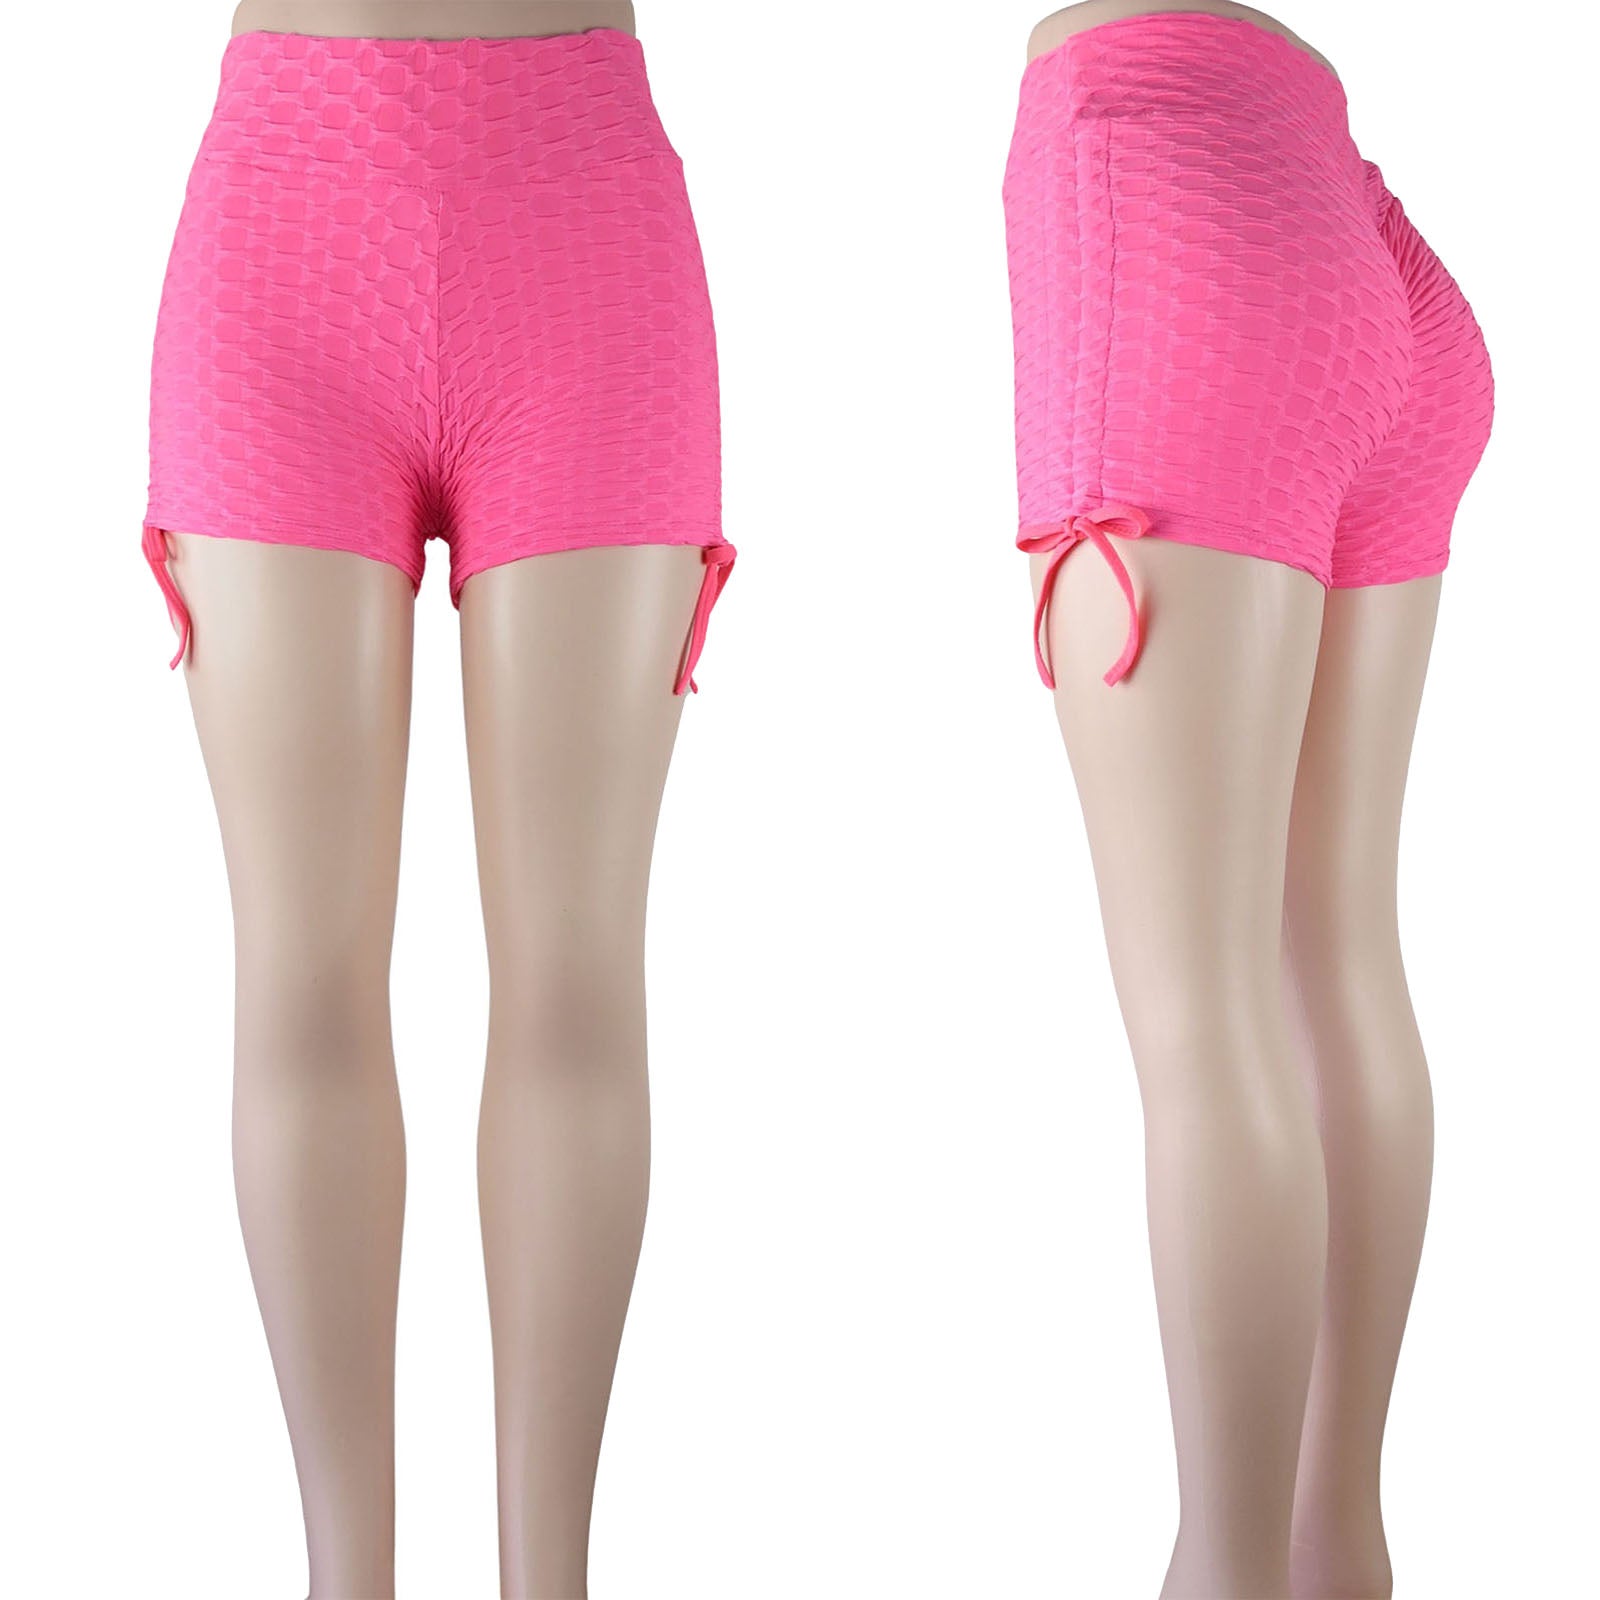 BioPromise Anti-Cellulite Slimming High Waisted Bermuda Shorts